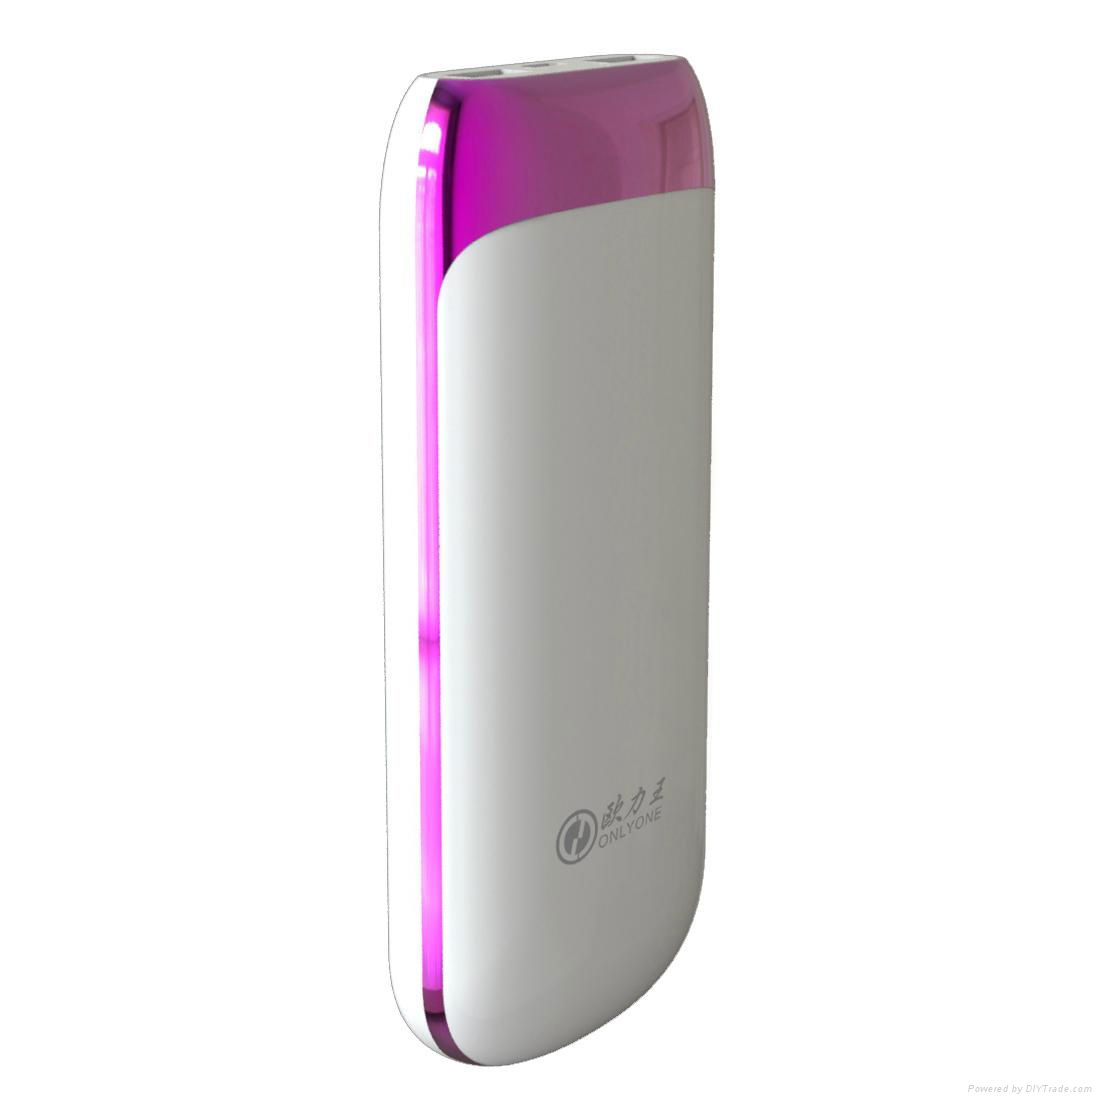 Newest design Dual USB Portable Mobile Power Bank 10000mAh 3